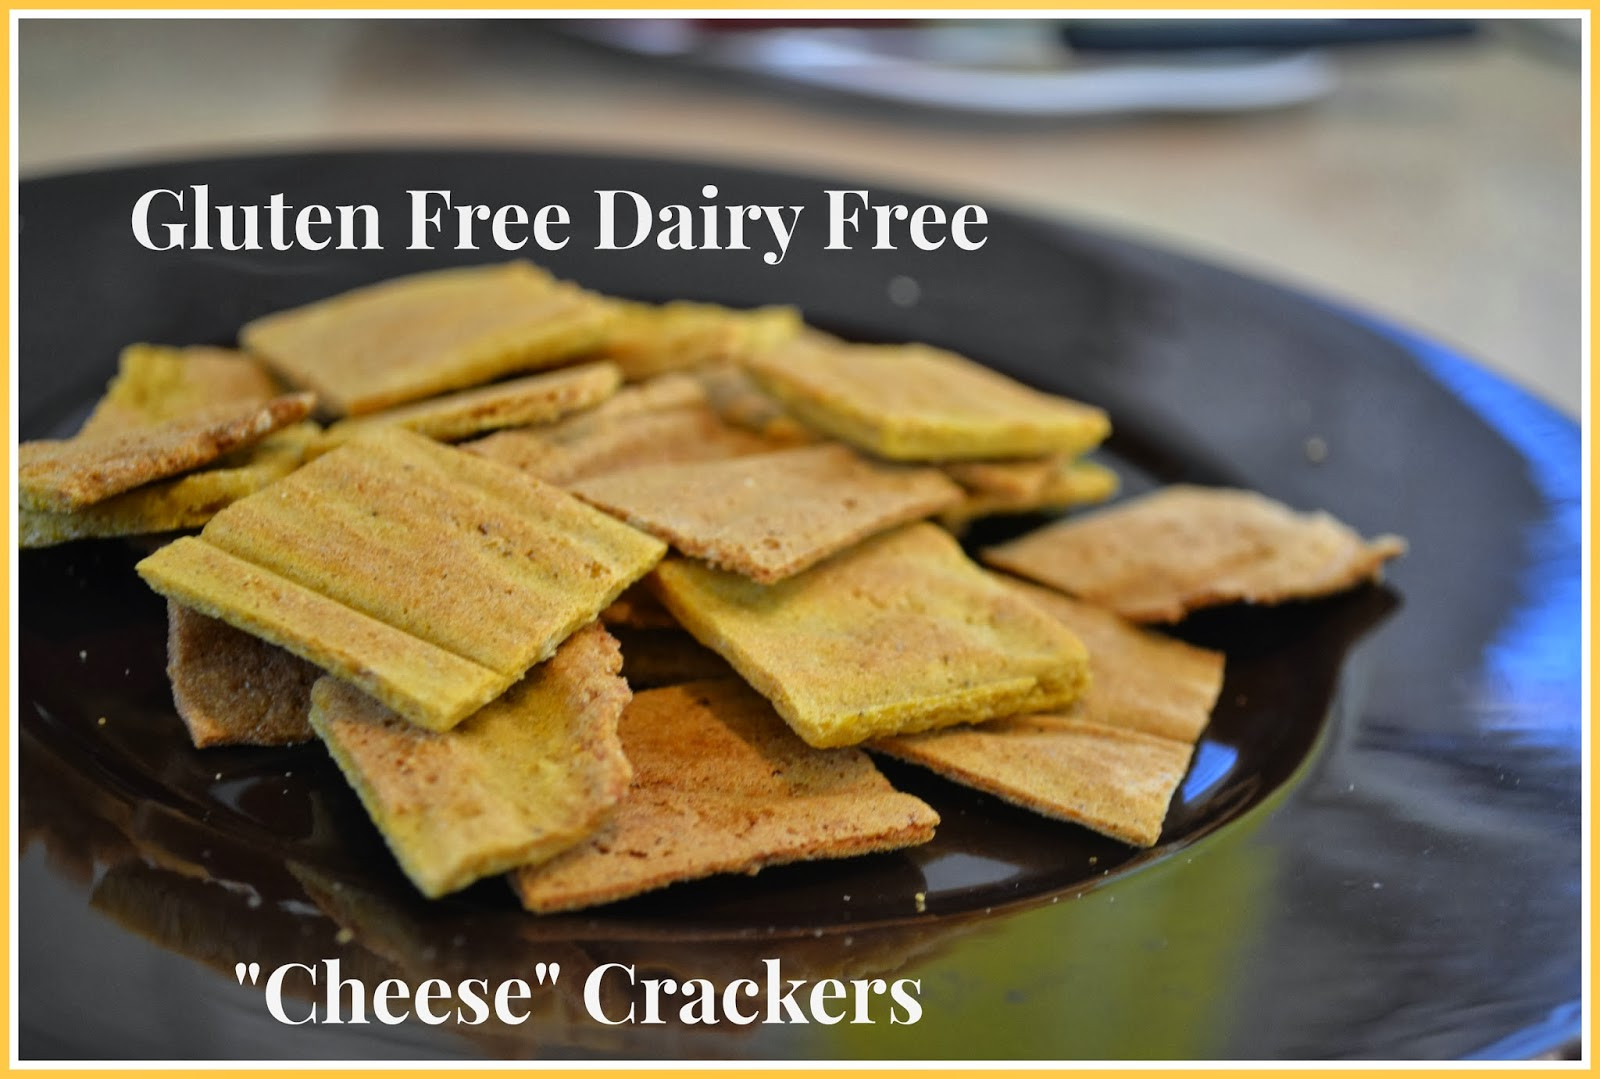 Gluten Free Cheese Crackers
 Gluten Free Dairy Free "Cheese" Crackers egg free nut